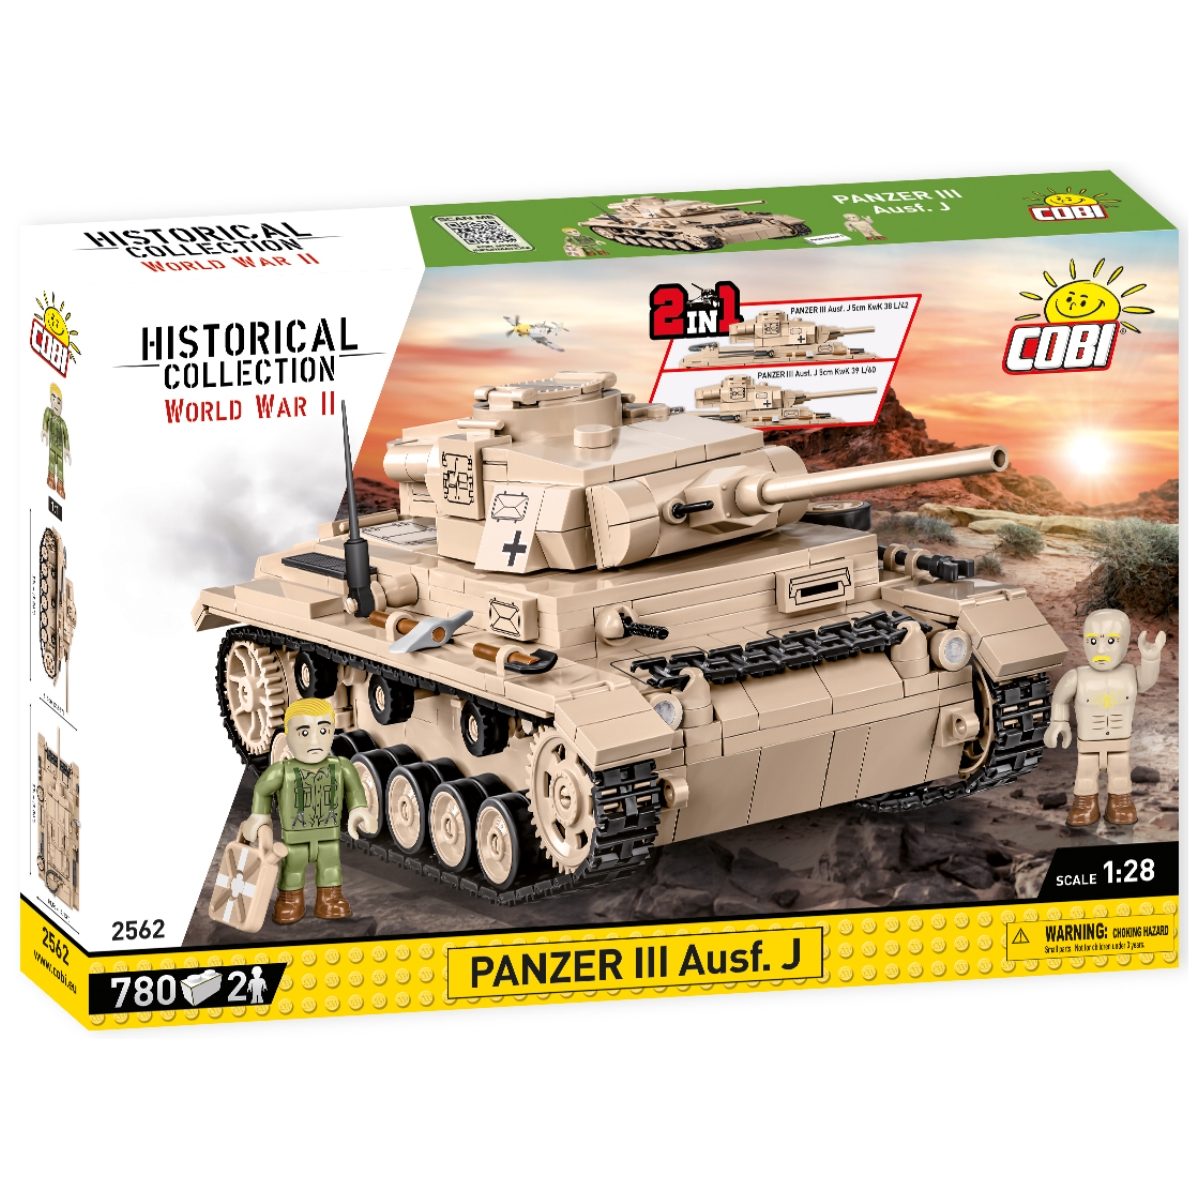 COBI Panzer III Aufs J 2 in 1 Set (2562)